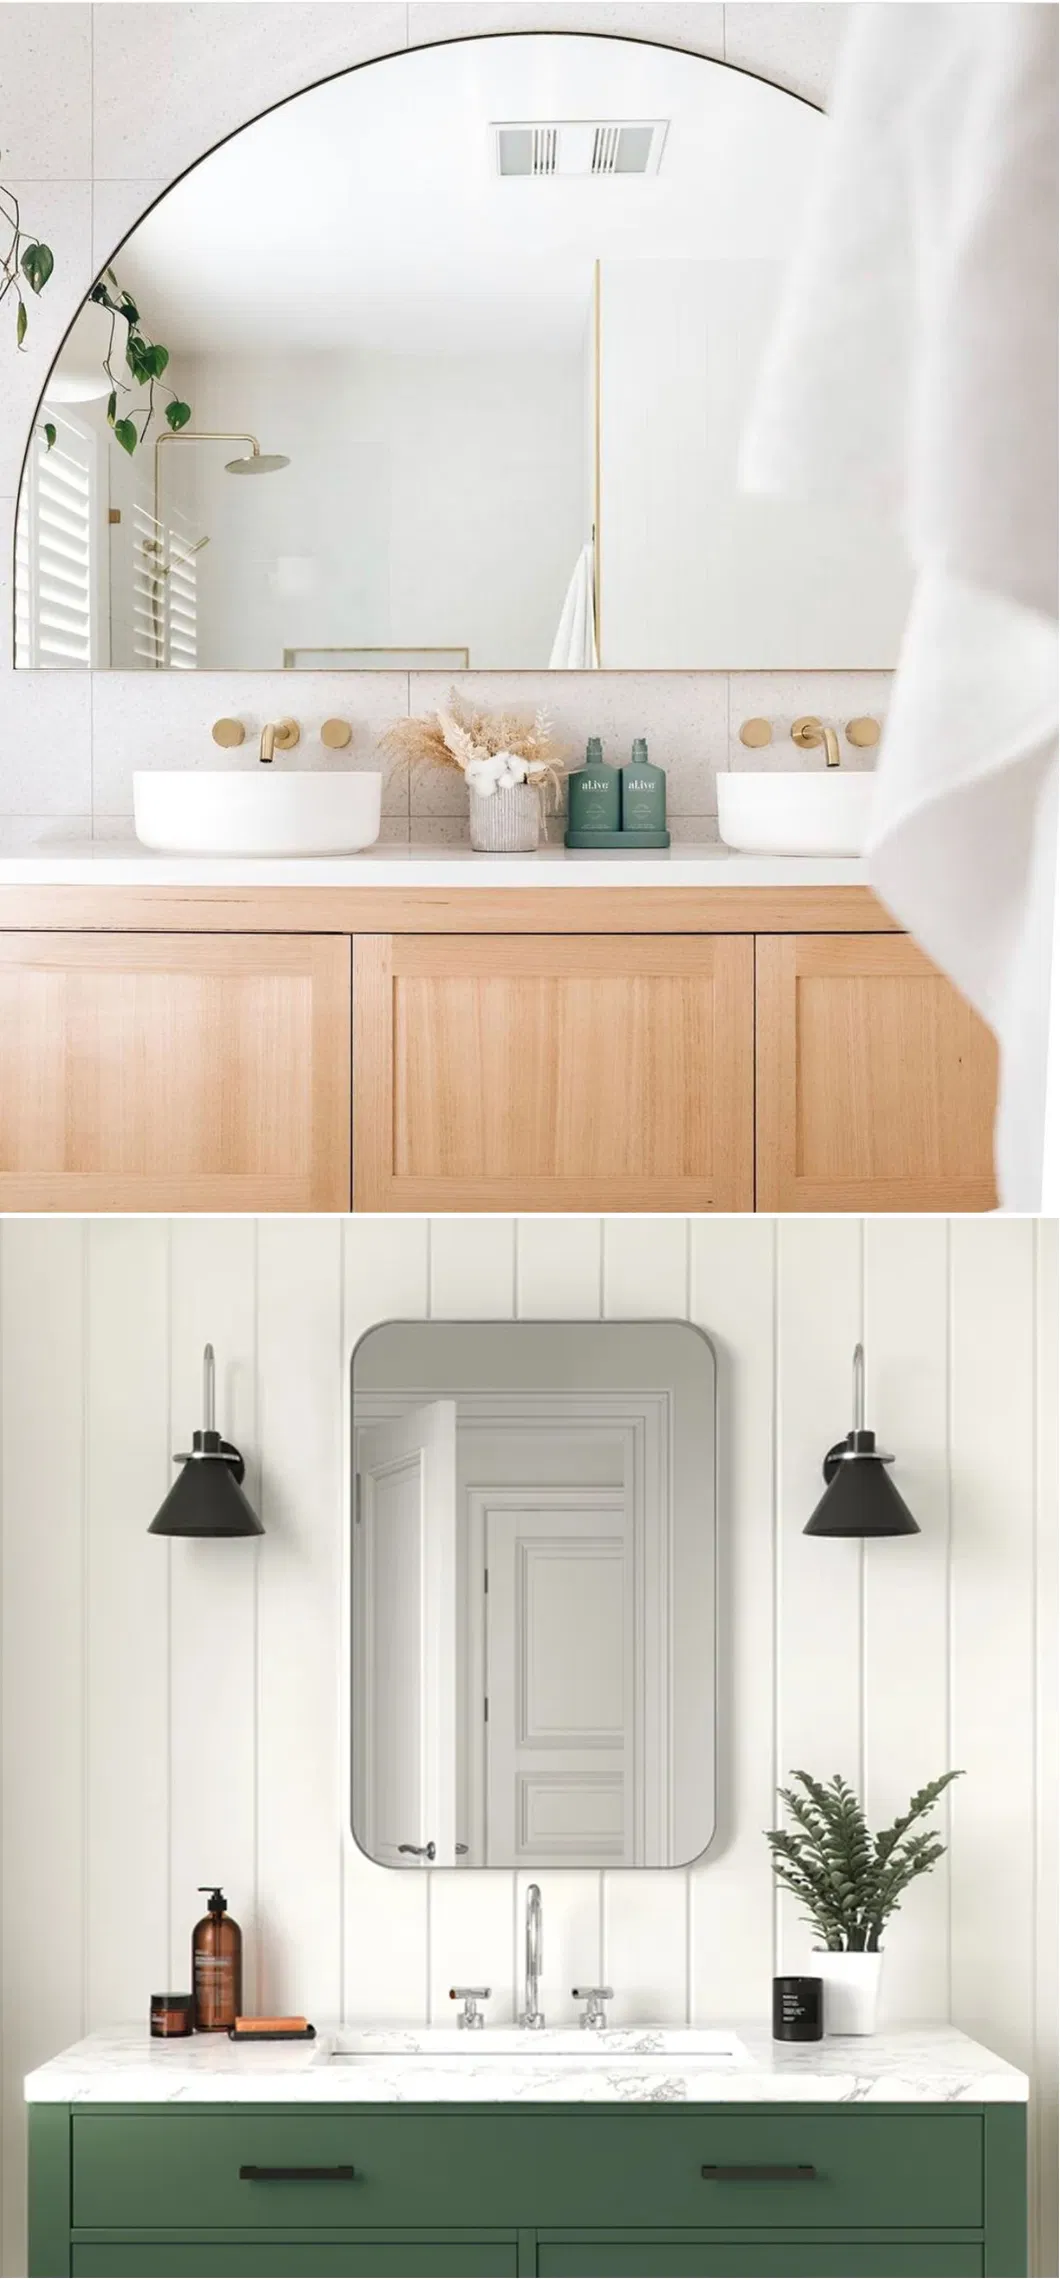 ORTONBATH New Design Gold Decorative Bath Home Smart Wall Mounted Nonled Mirror Bathroom Designer Art Mirror with Shelf